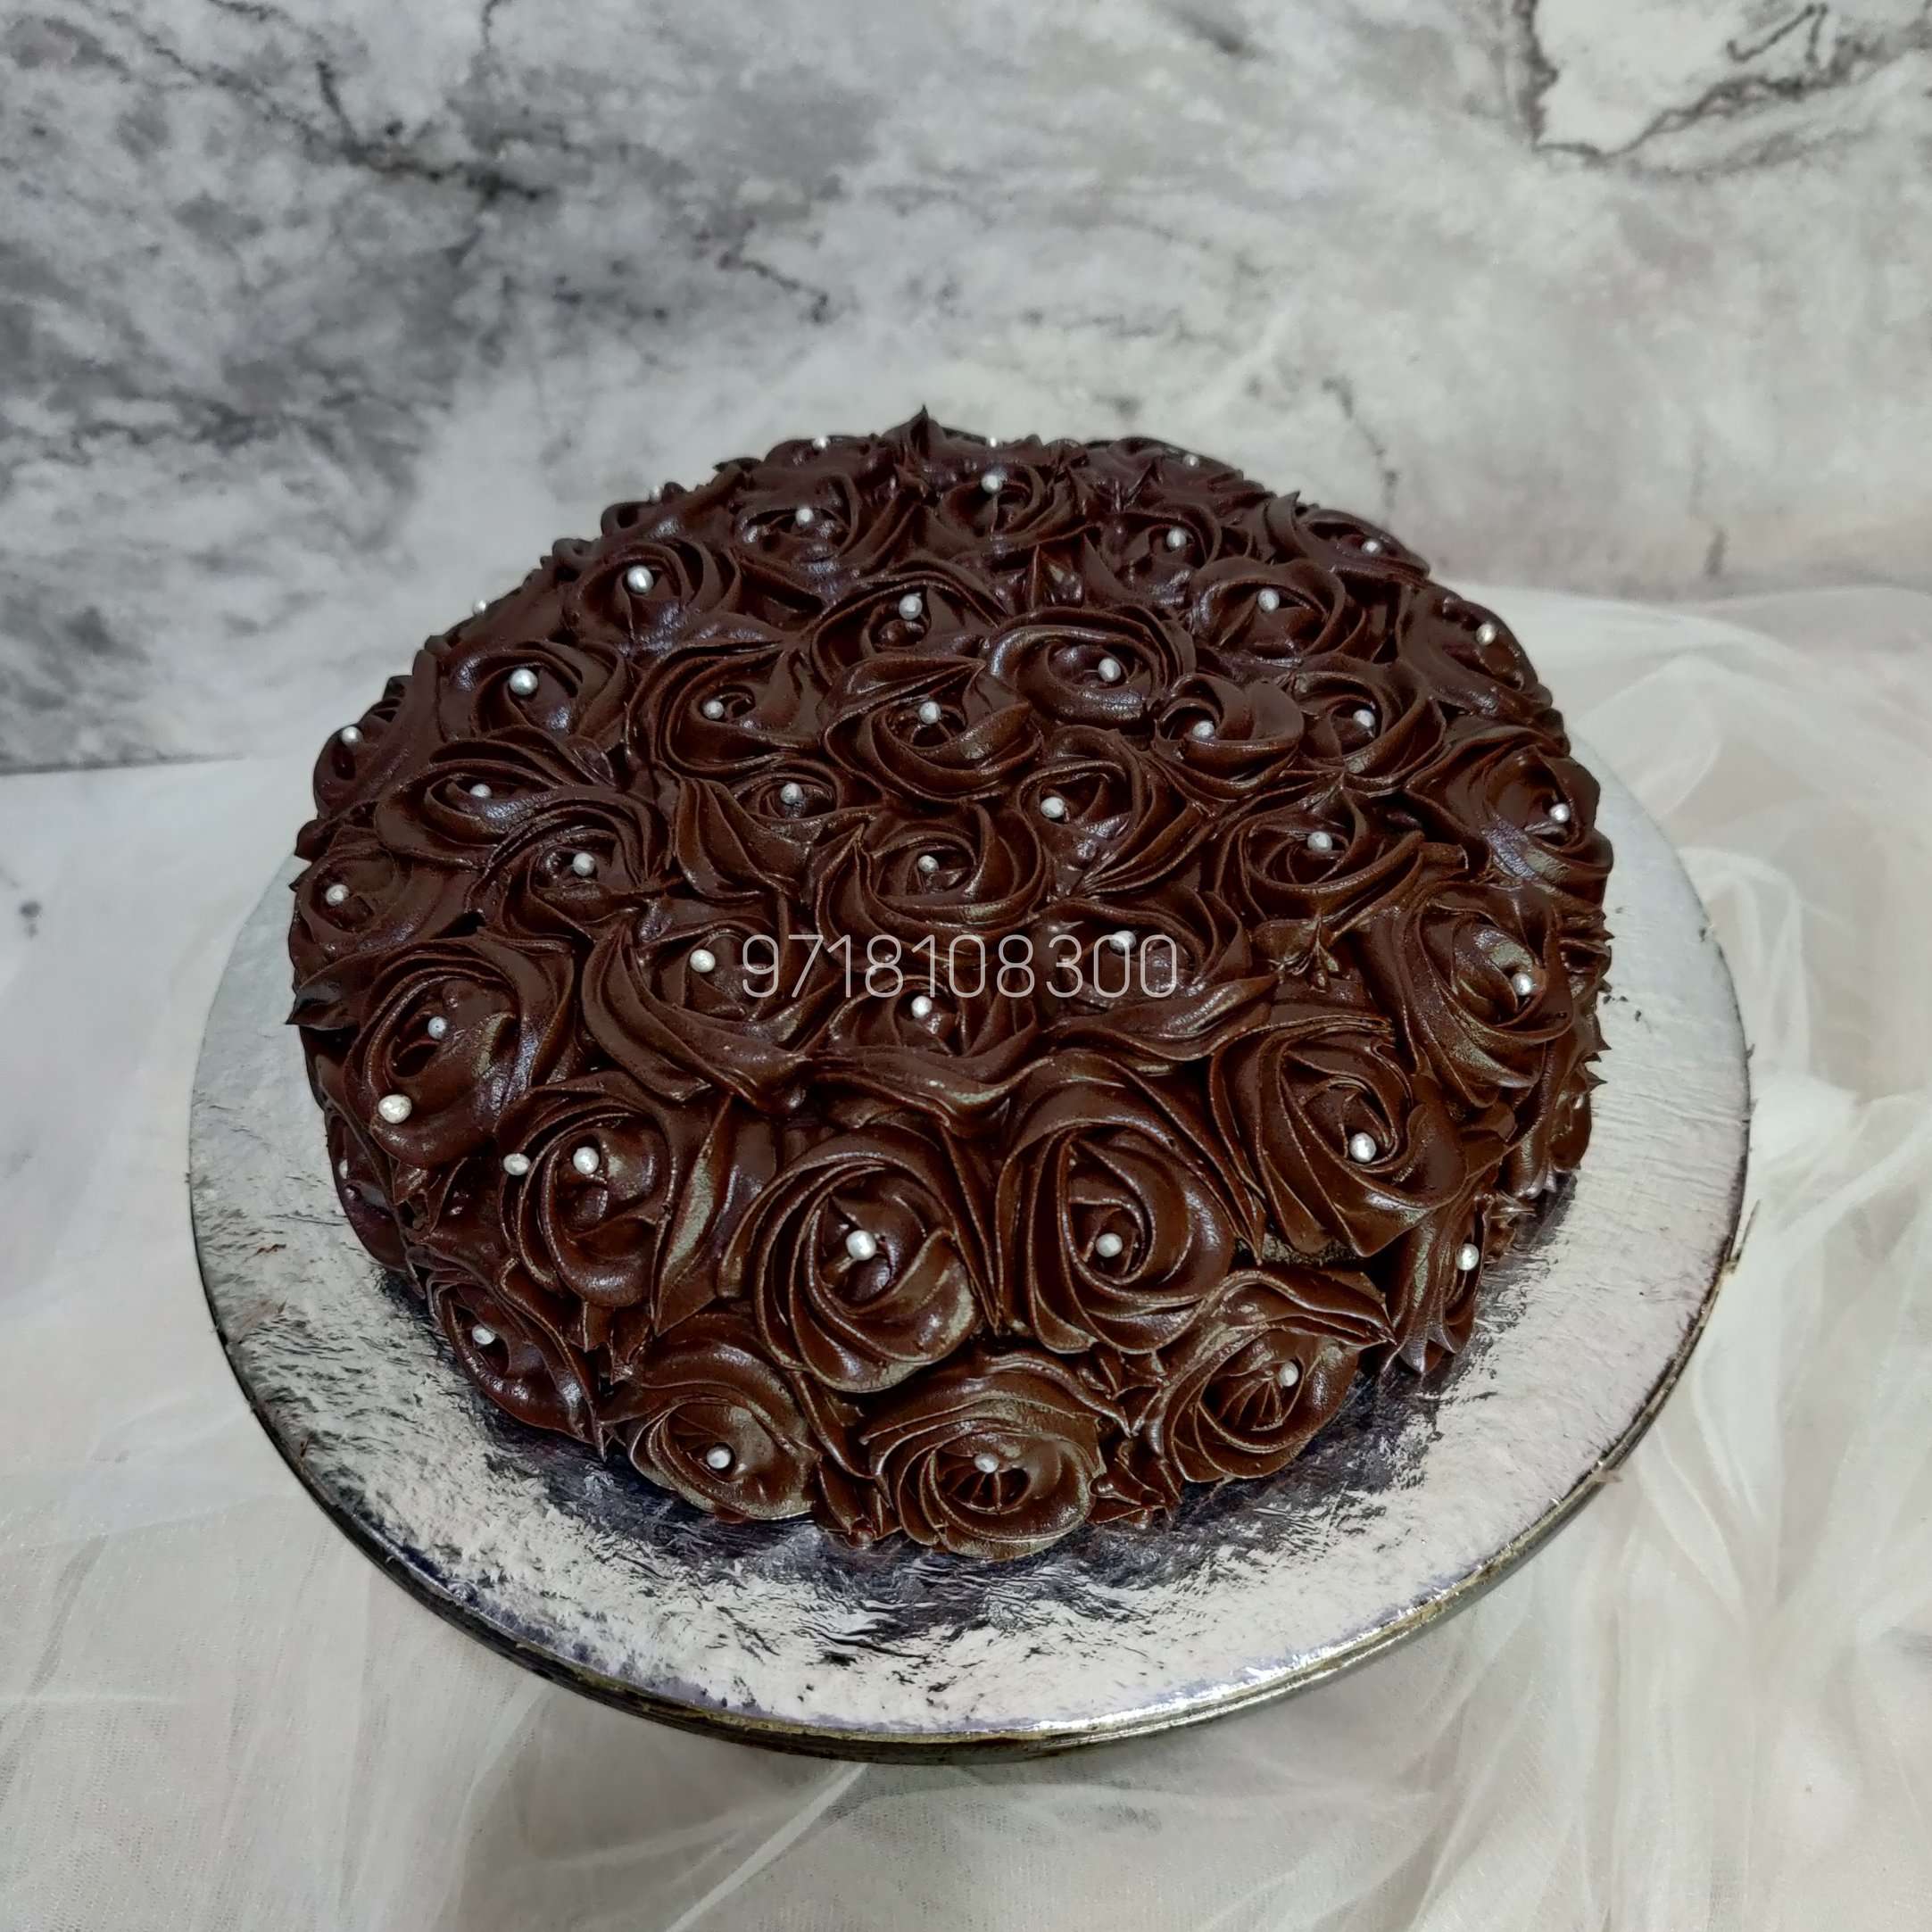 Chocolate Rose Cake | Chocolate Flower Cake | Yummy Cake